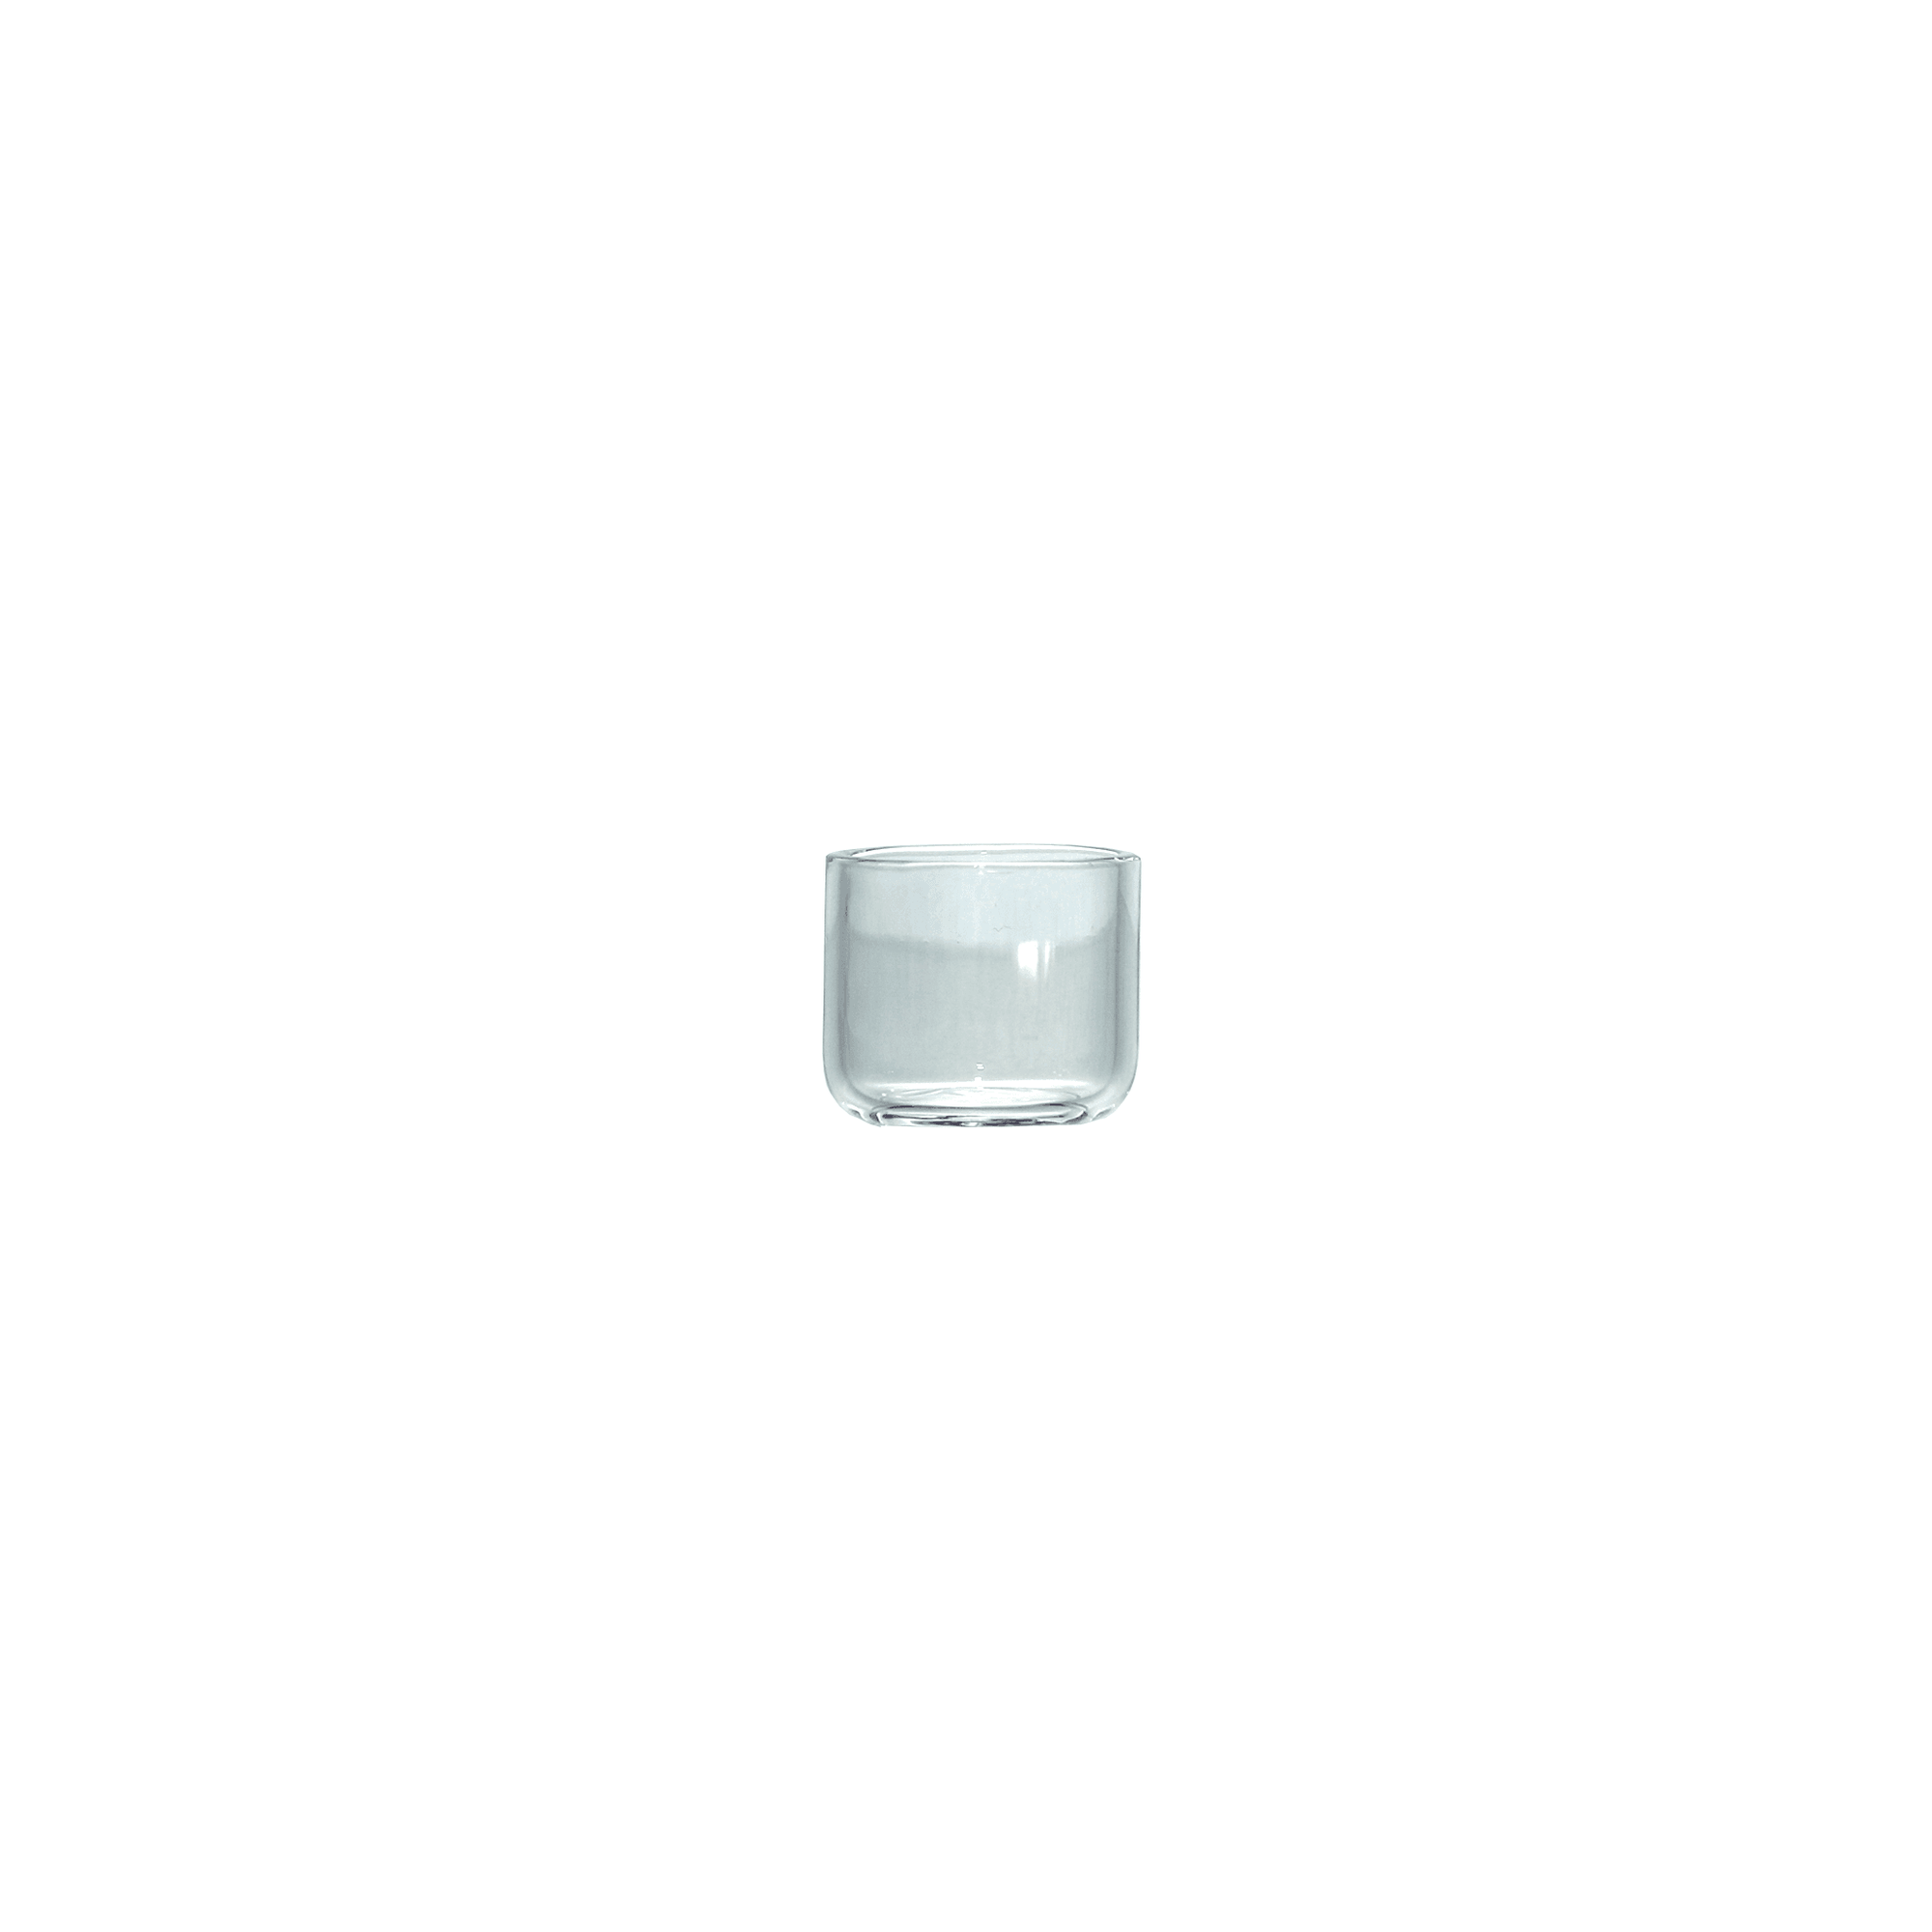 Flat Top Quartz Banger | 14mm Female With Cup Insert & Saucer Cap | Insert Cup View | DW